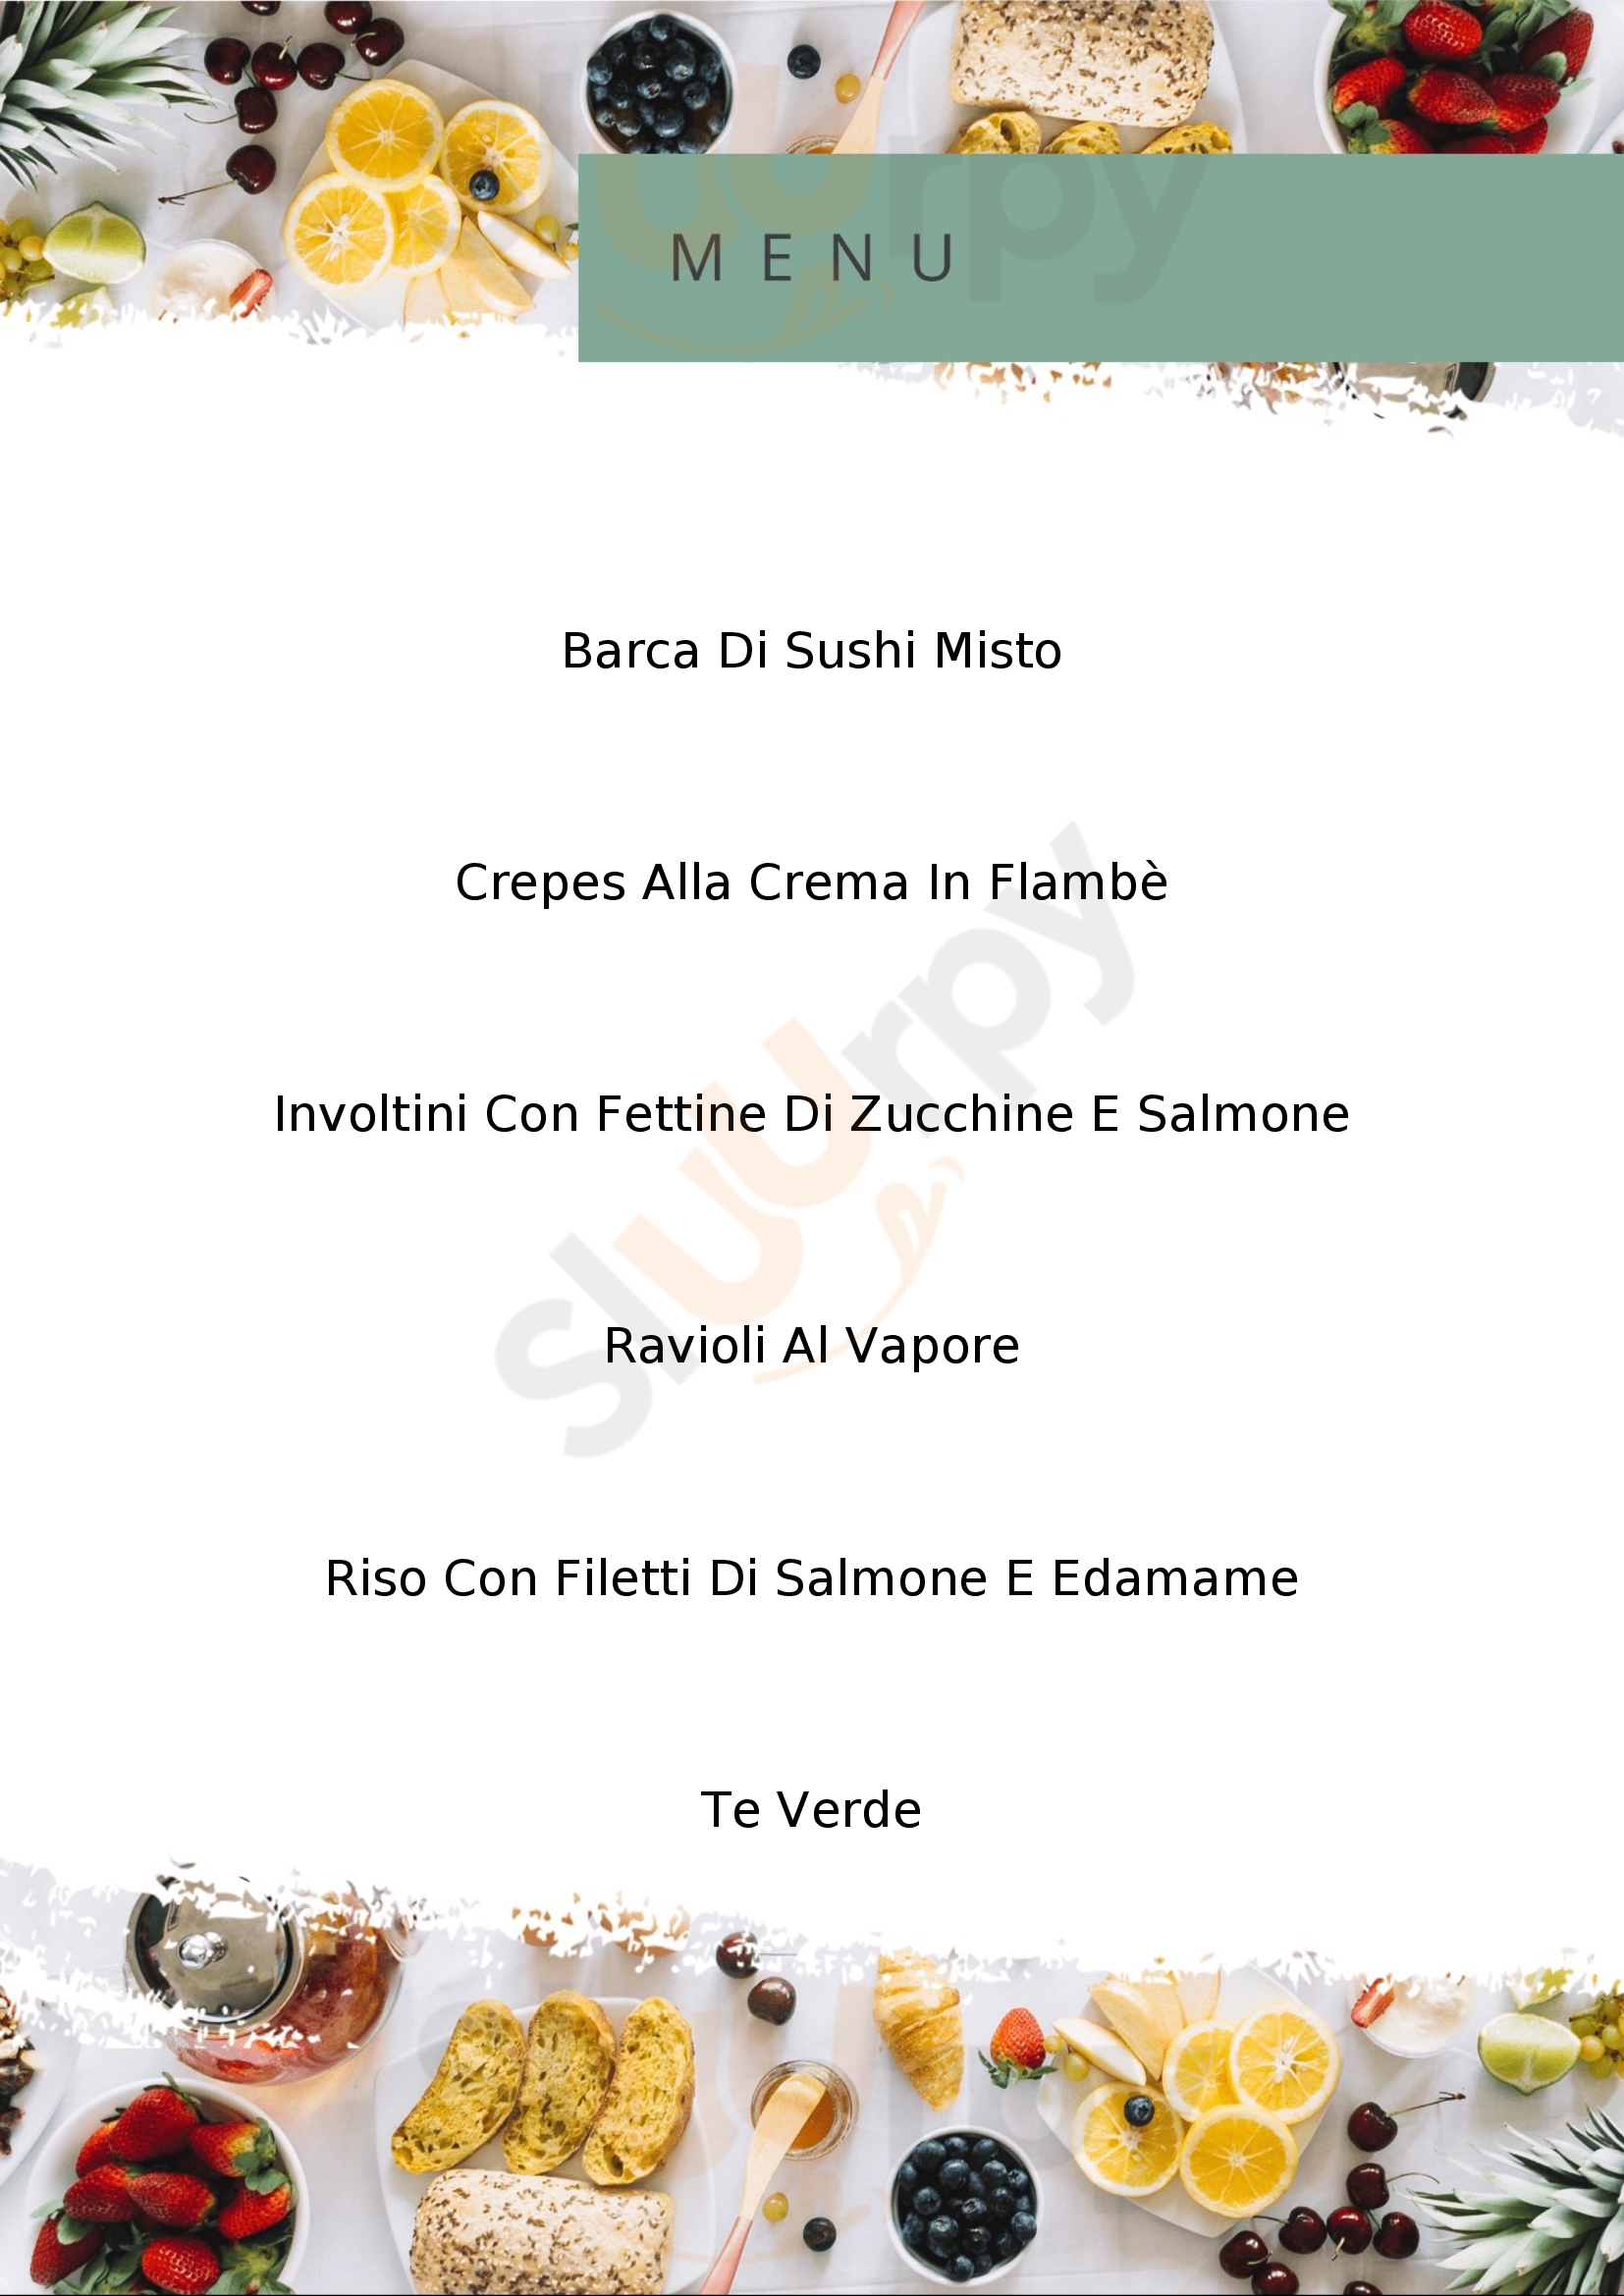 Nami Sushi Restaurant Milano menù 1 pagina